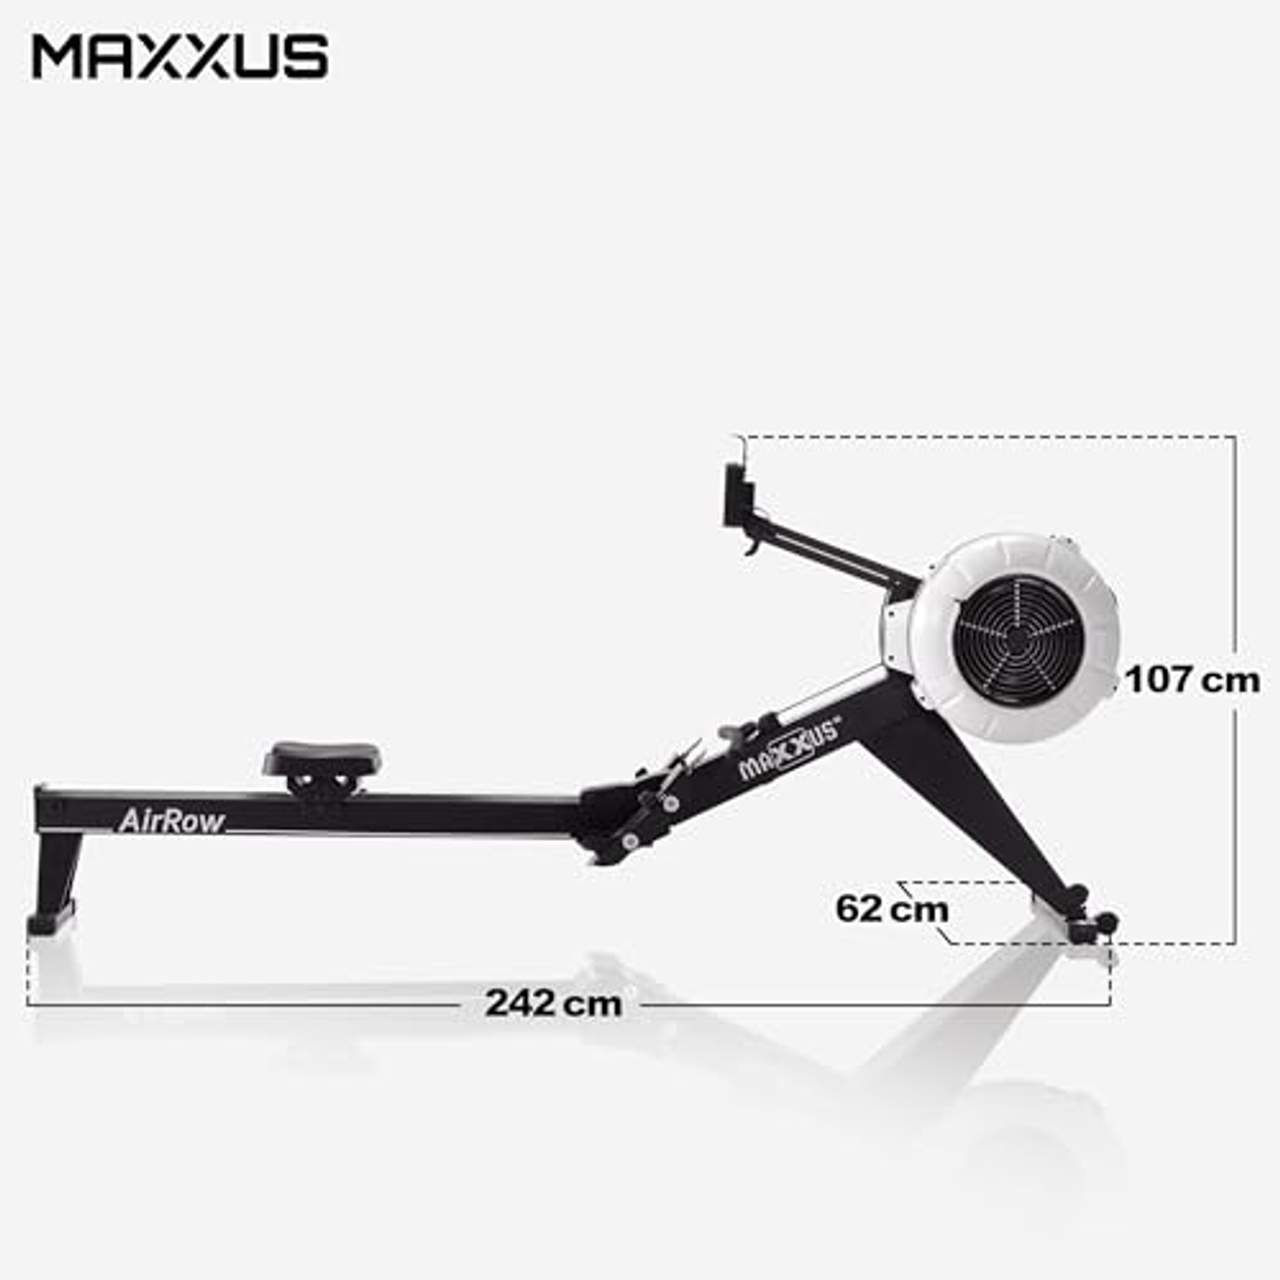 Maxxus Rudergerät AirRow Rower Studio Qualität